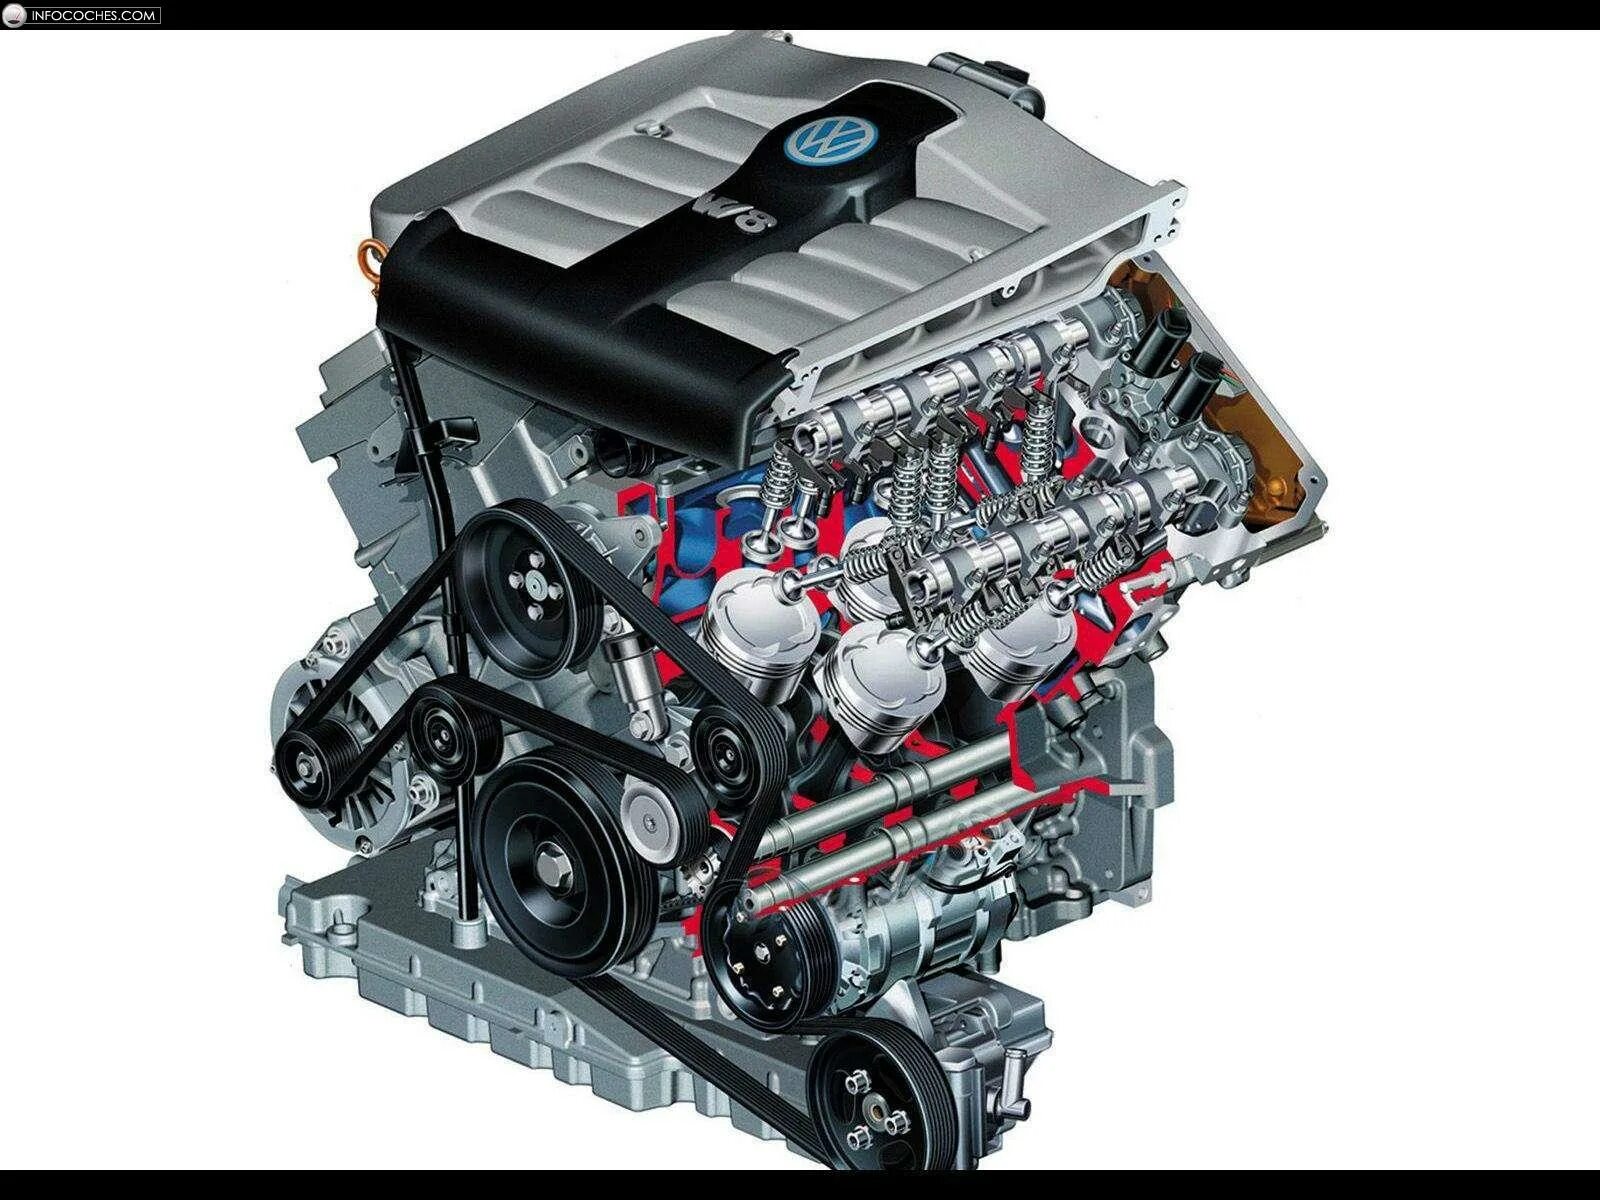 C 2.0 f. Двигатель w12 Volkswagen. ДВС vr6 Фольксваген. W12 двигатель Фольксваген. Мотор v12 6.0 Туарег.